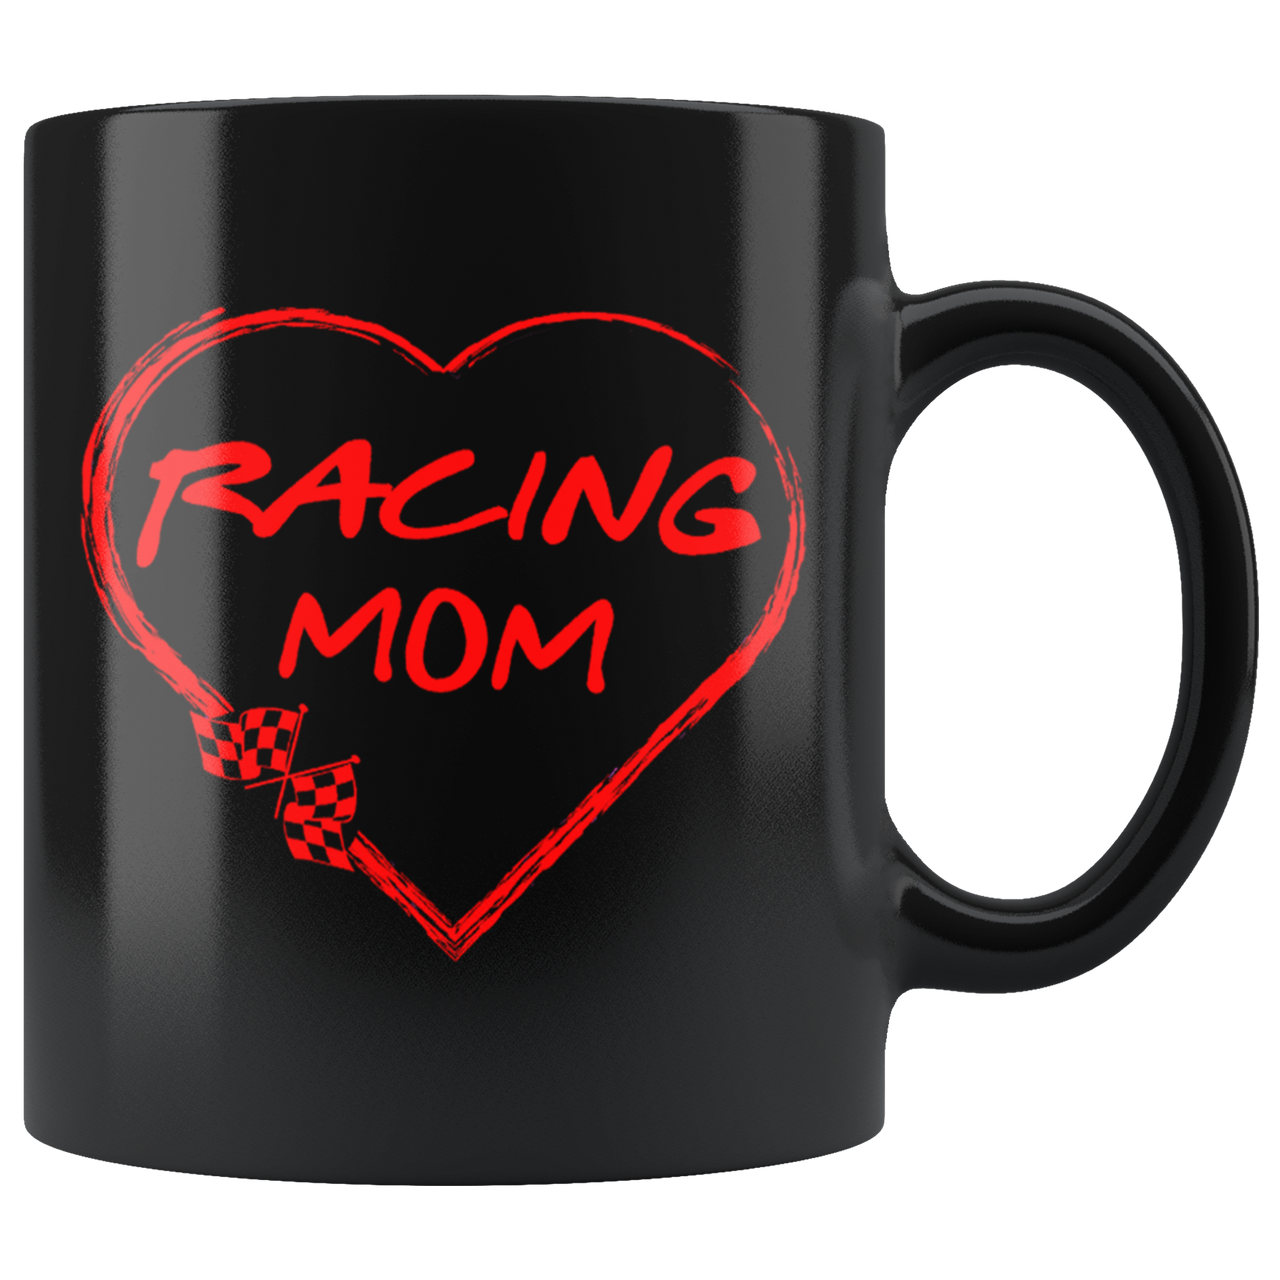 Racing Mom Heart Mug!